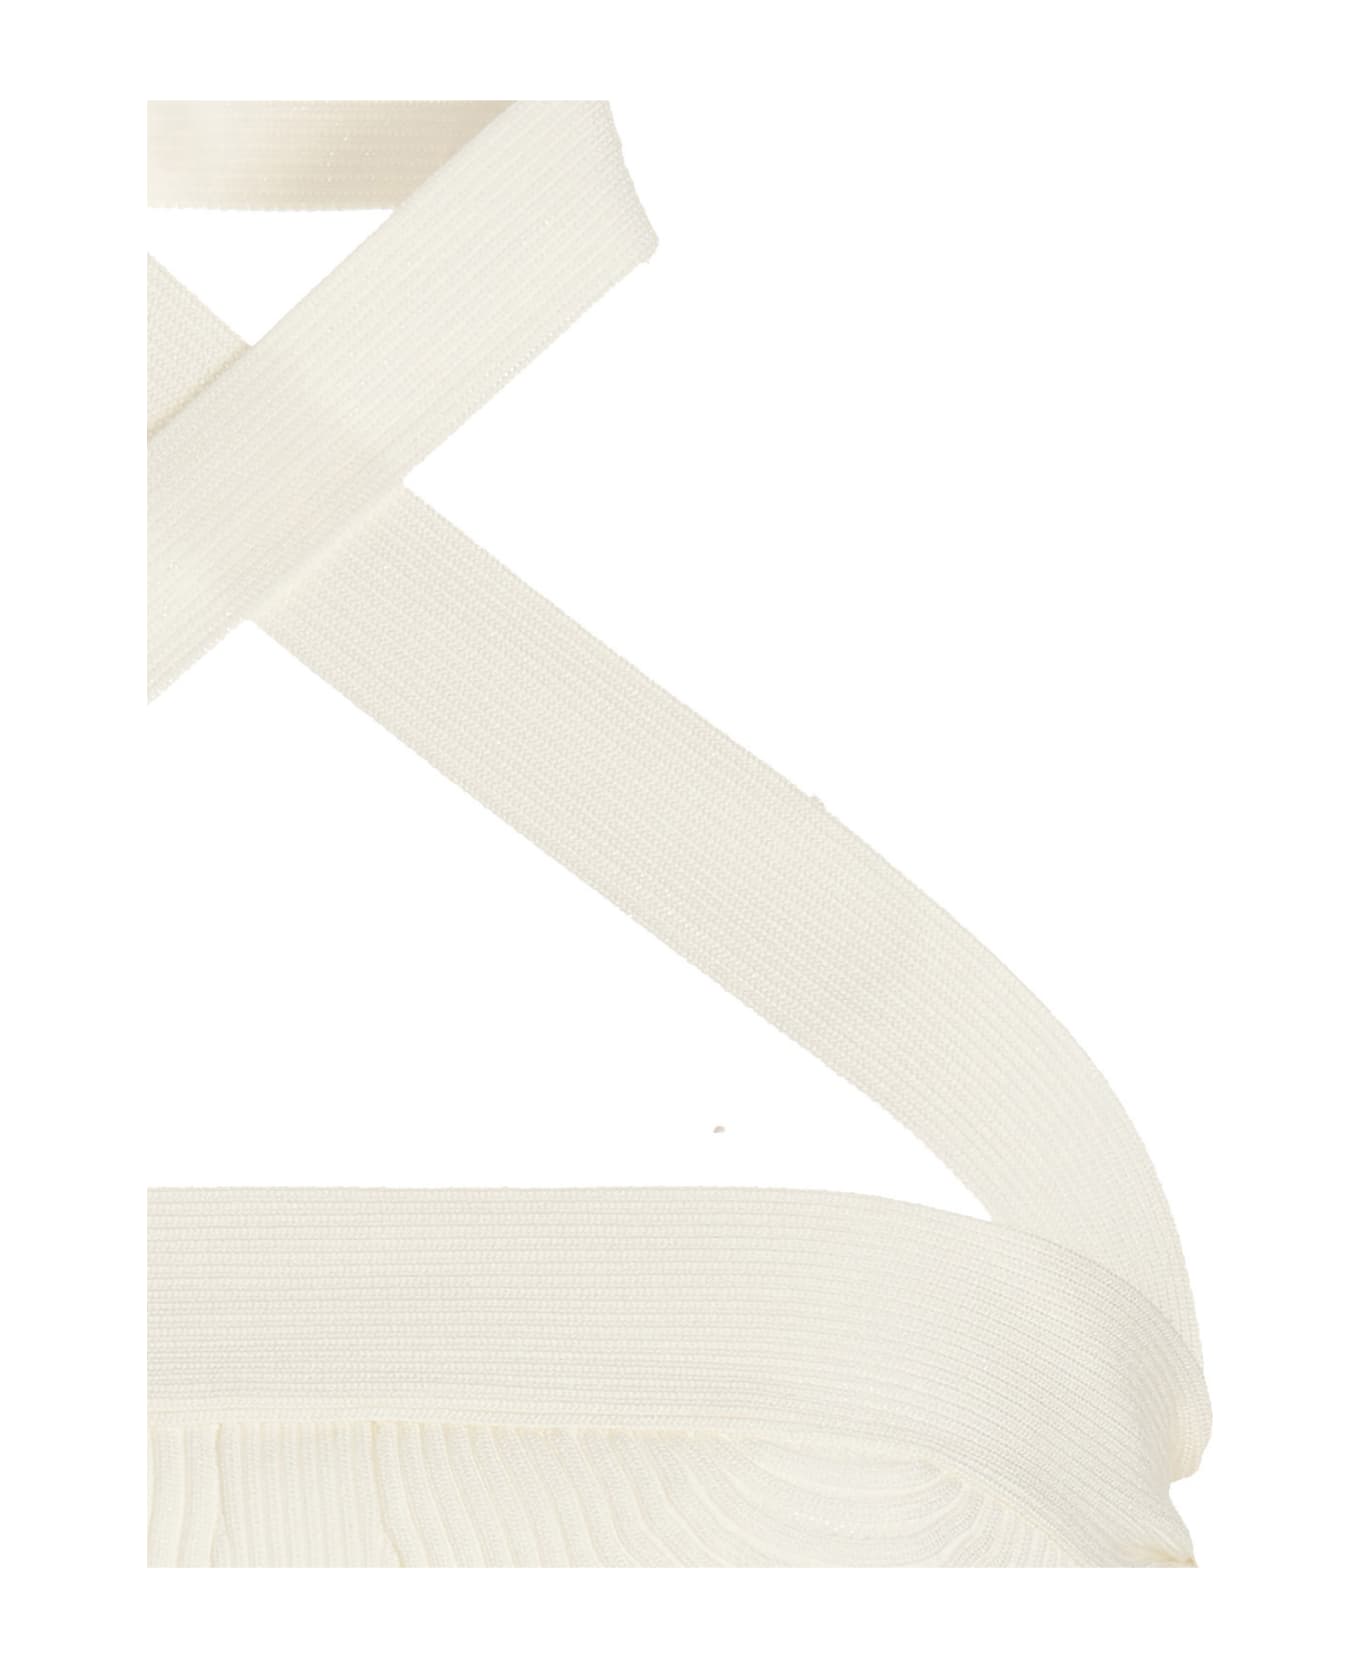 Proenza Schouler Asymmetric Shoulder Knit Top - White